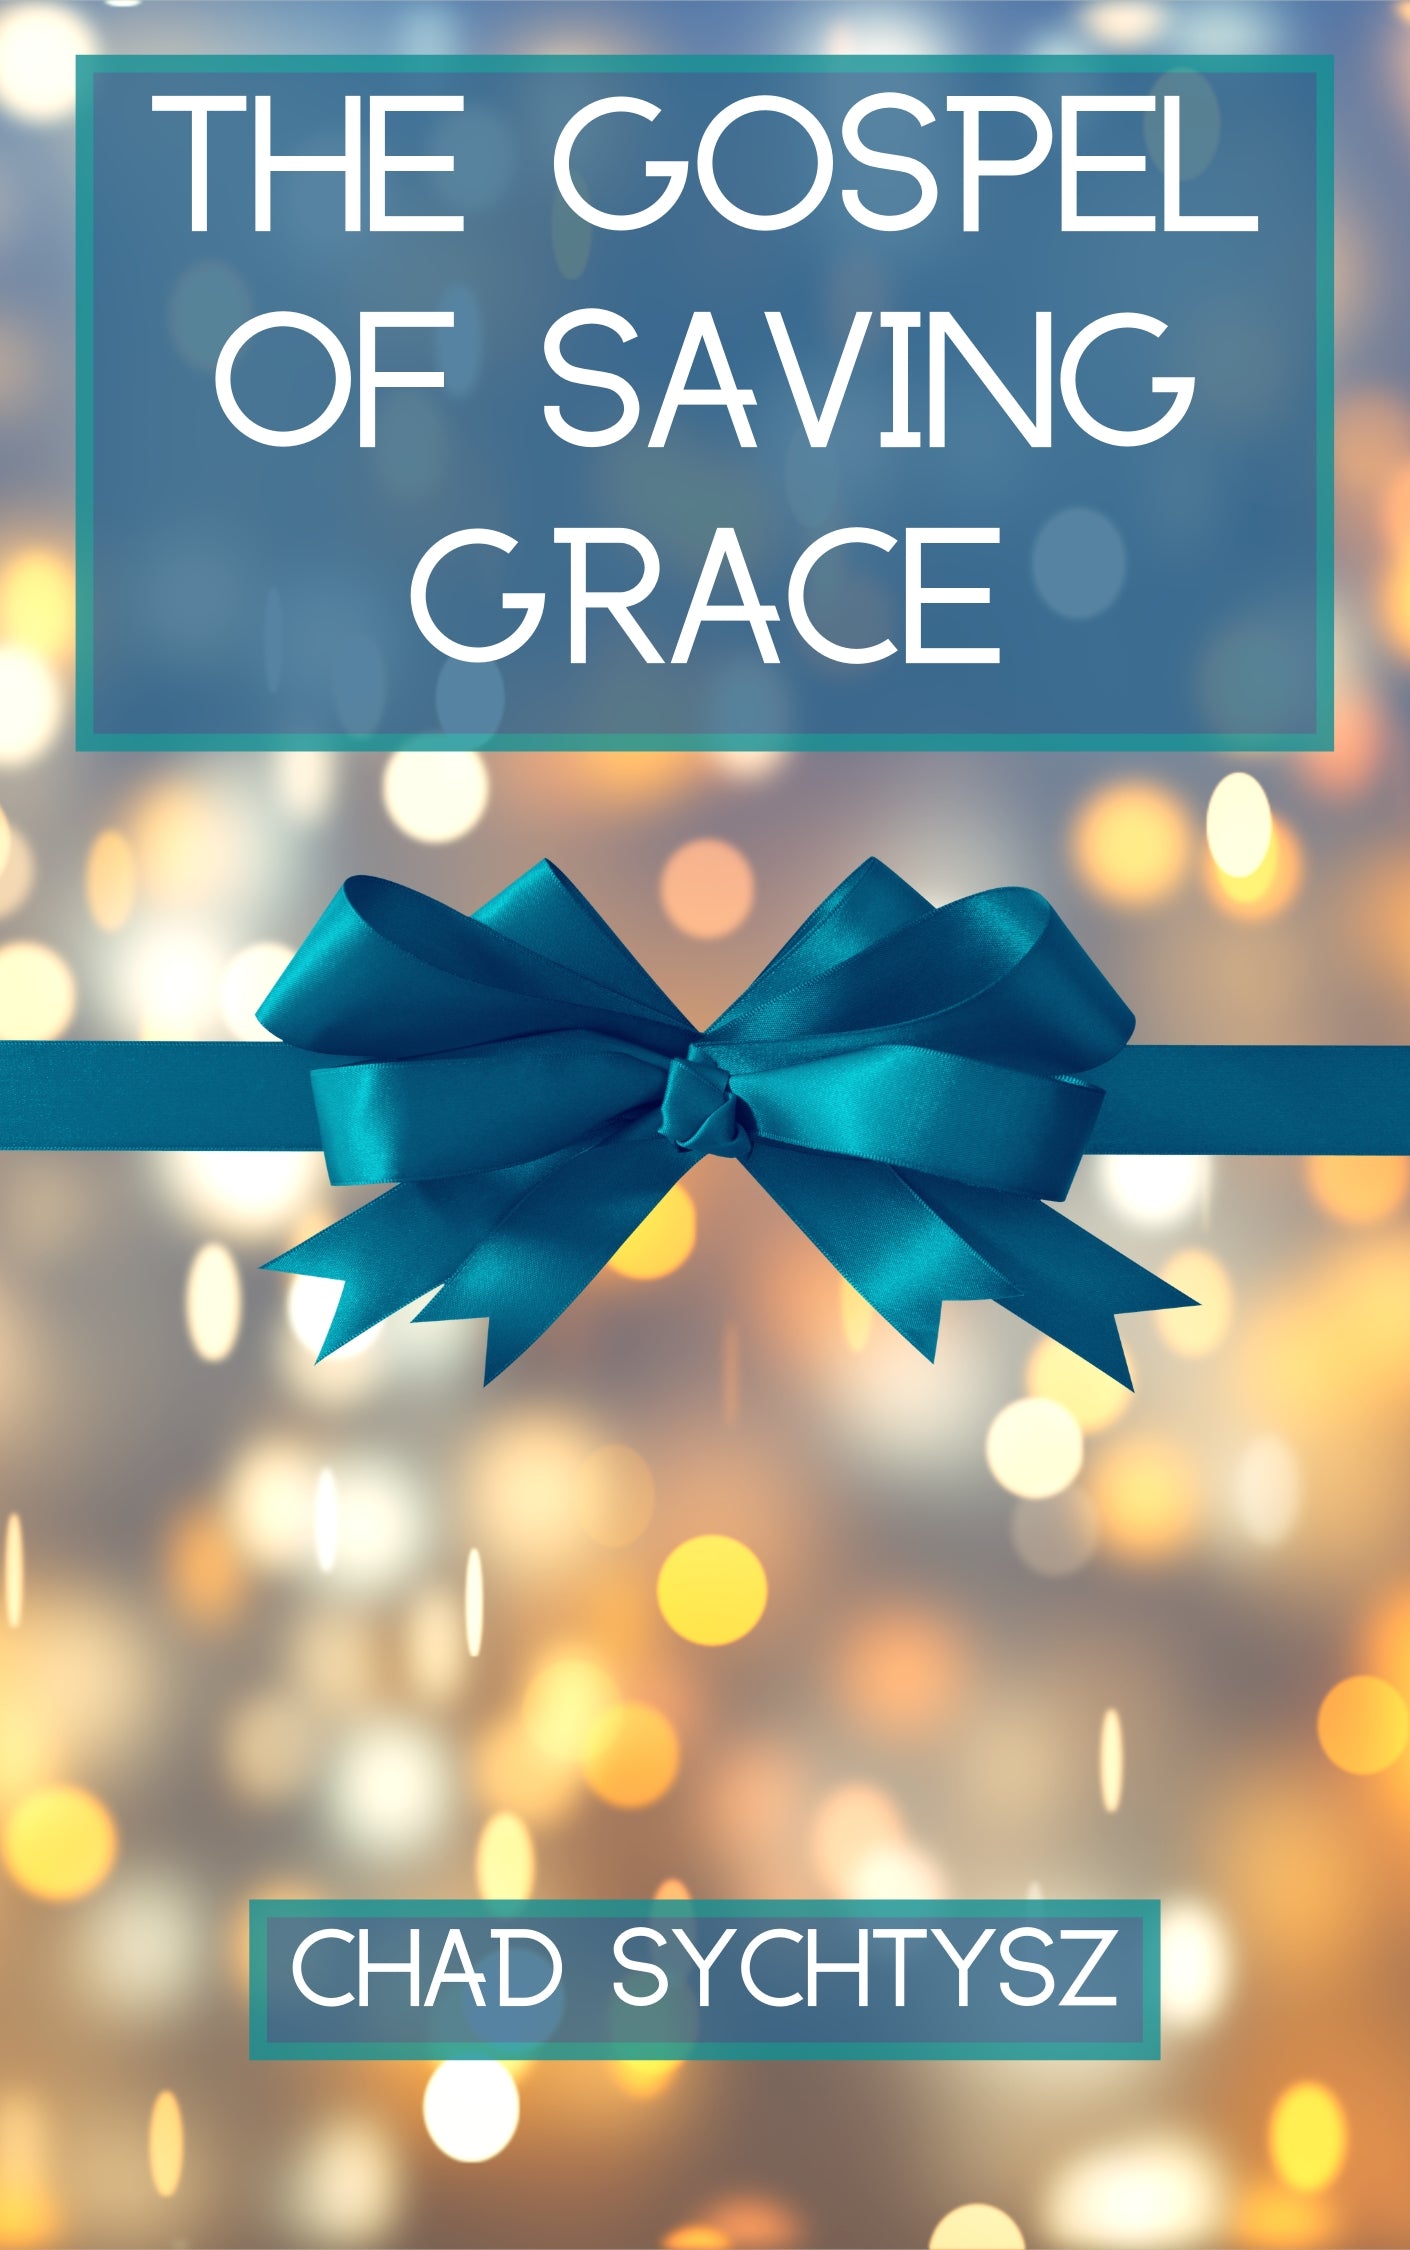 Get the Gospel of Saving Grace as an Audio Book!